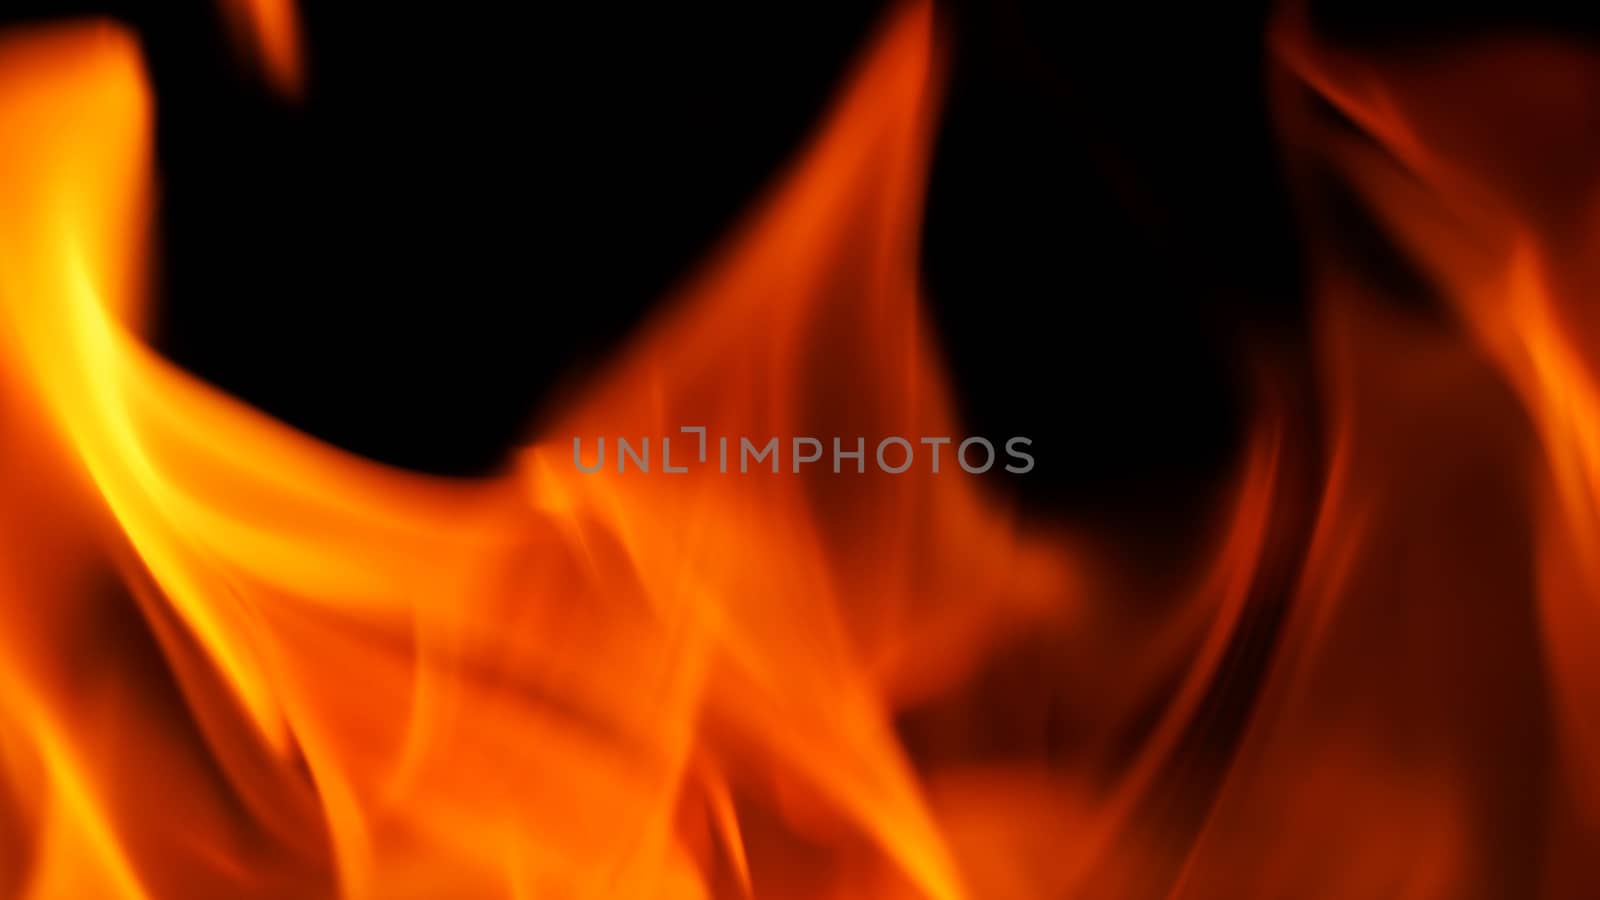 Blurred hot danger fire blazing. by gnepphoto